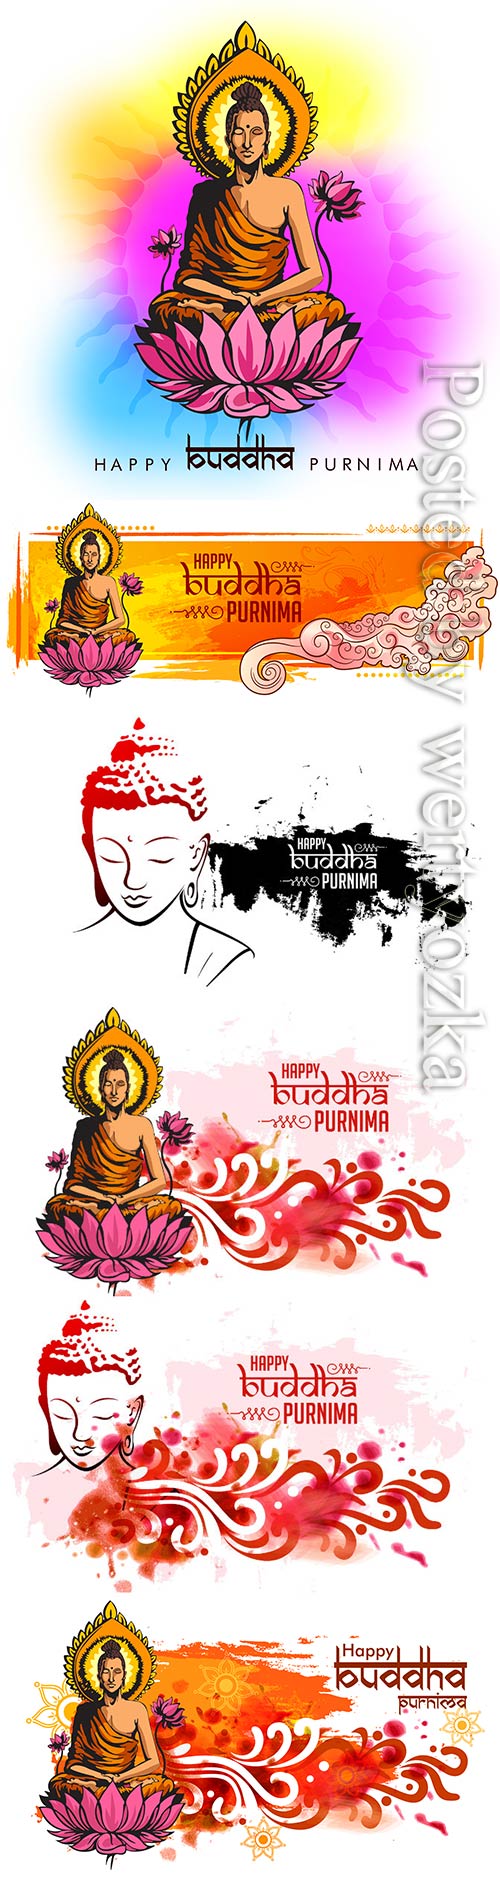 Buddha Purnima vector background with nice and creative design